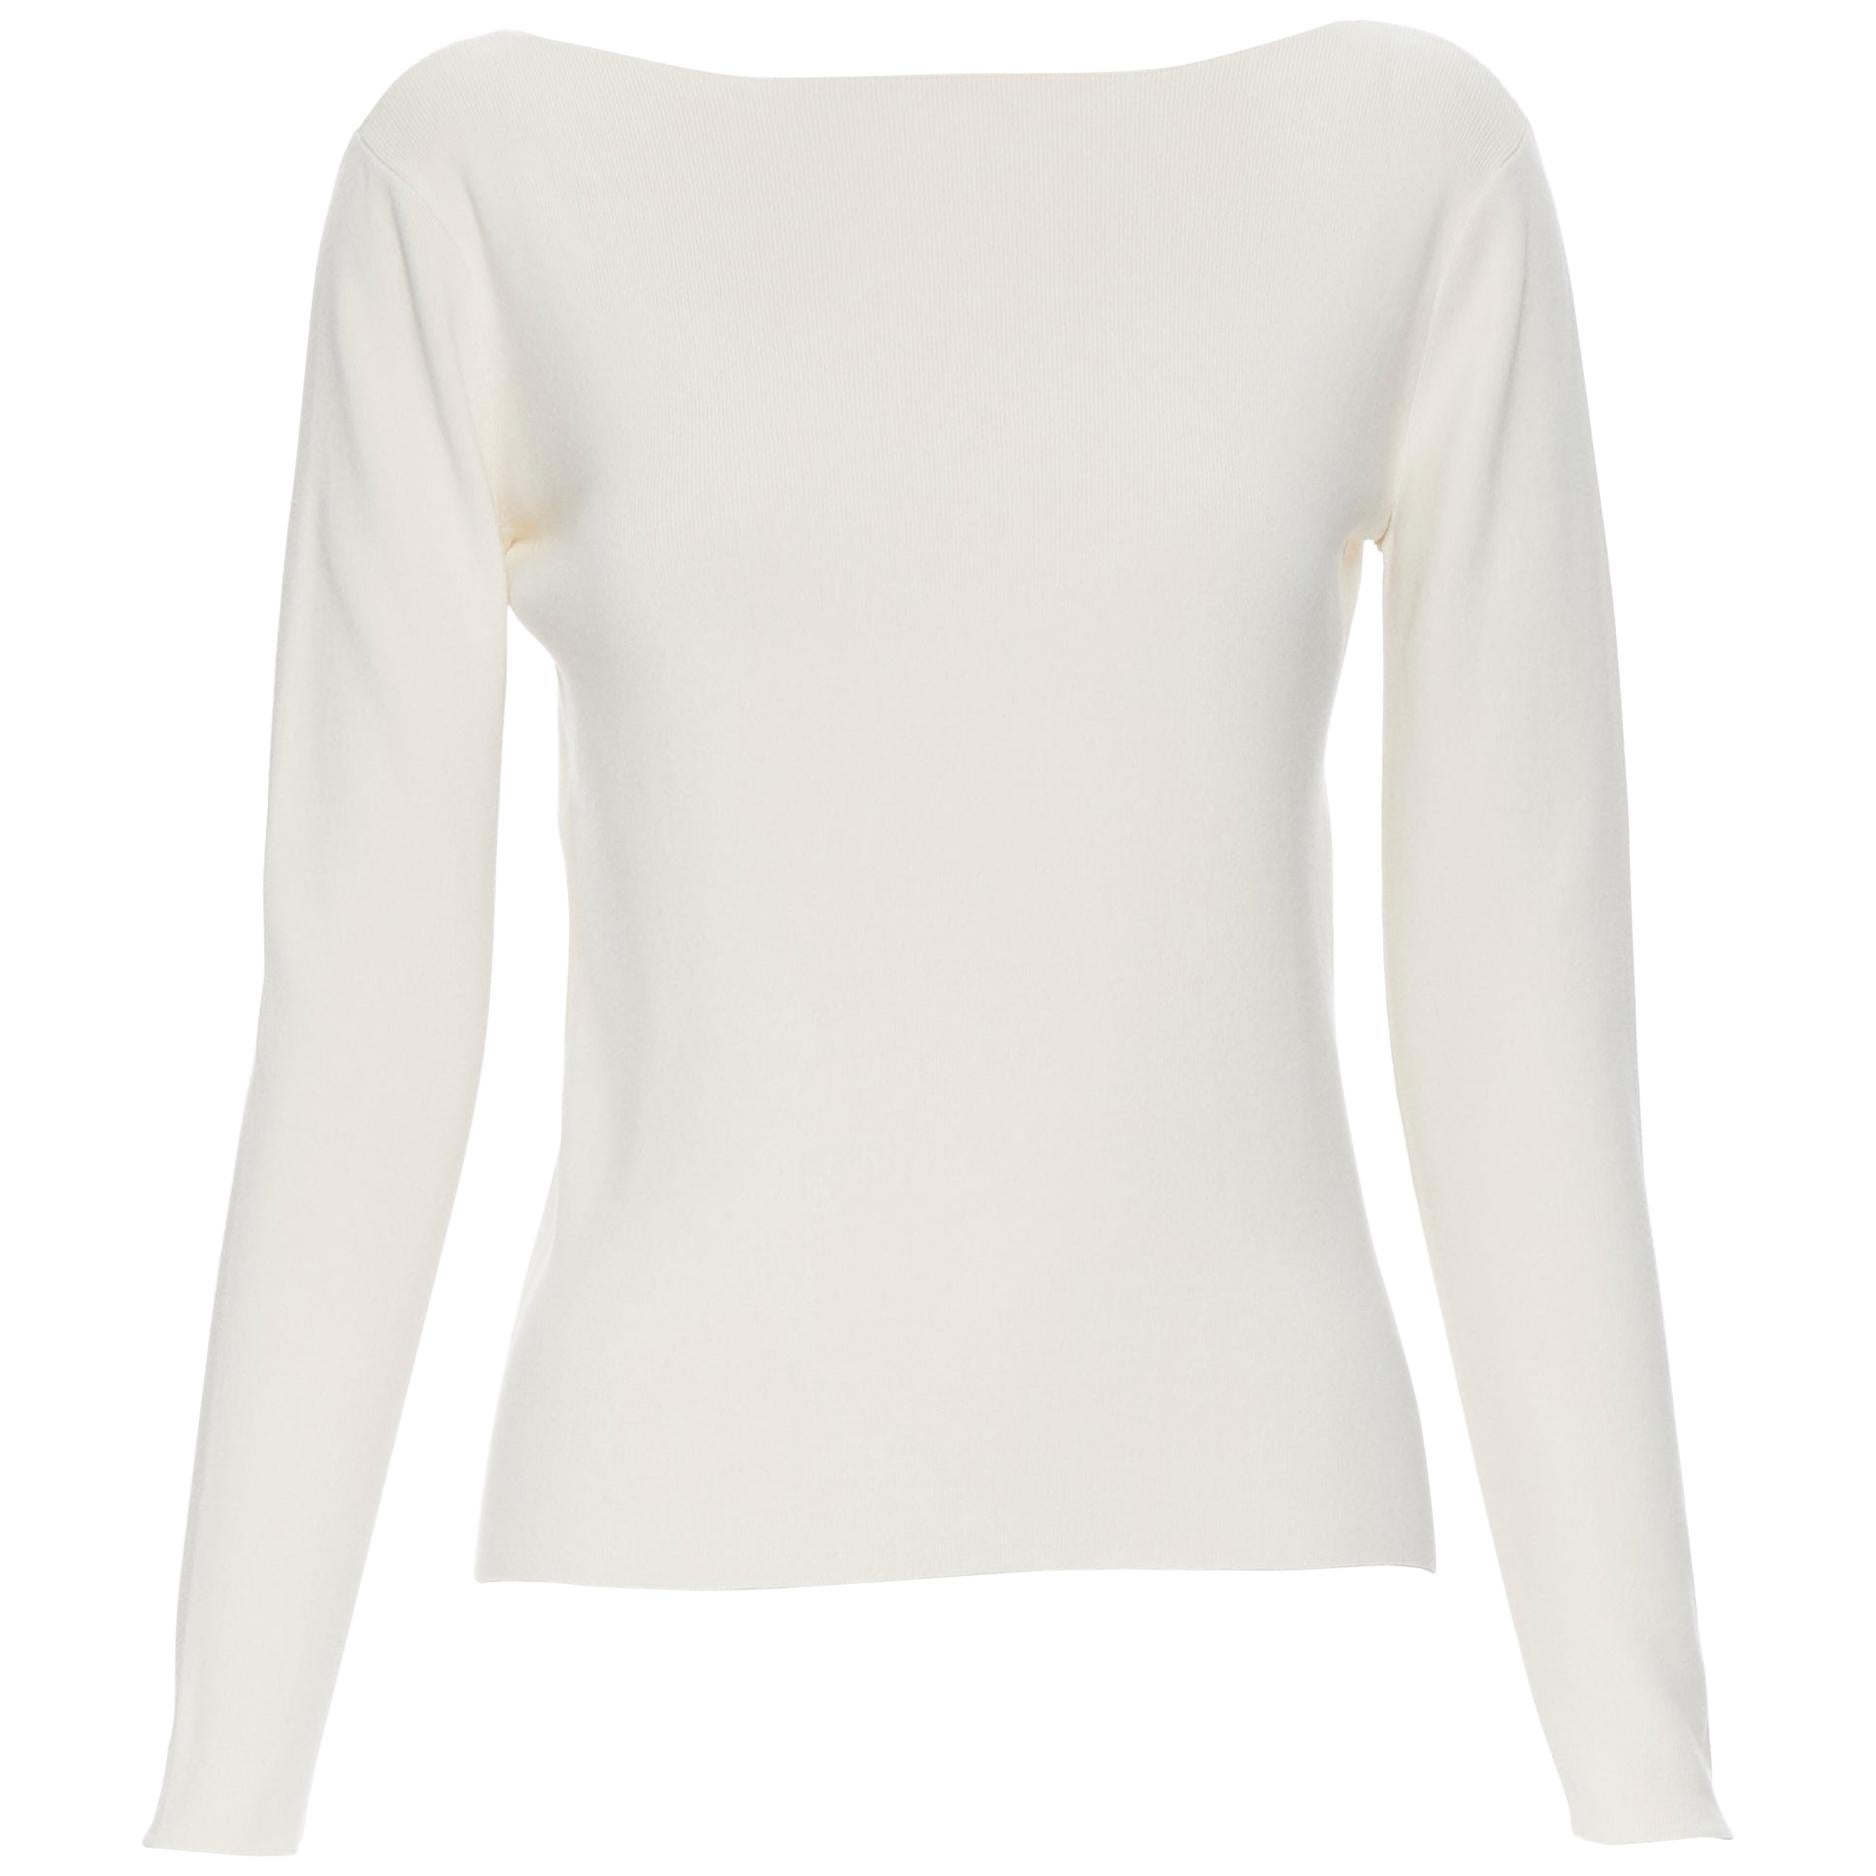 WEEKEND MAX MARA cream beige viscose polyamide knit boat neck sweater top XS